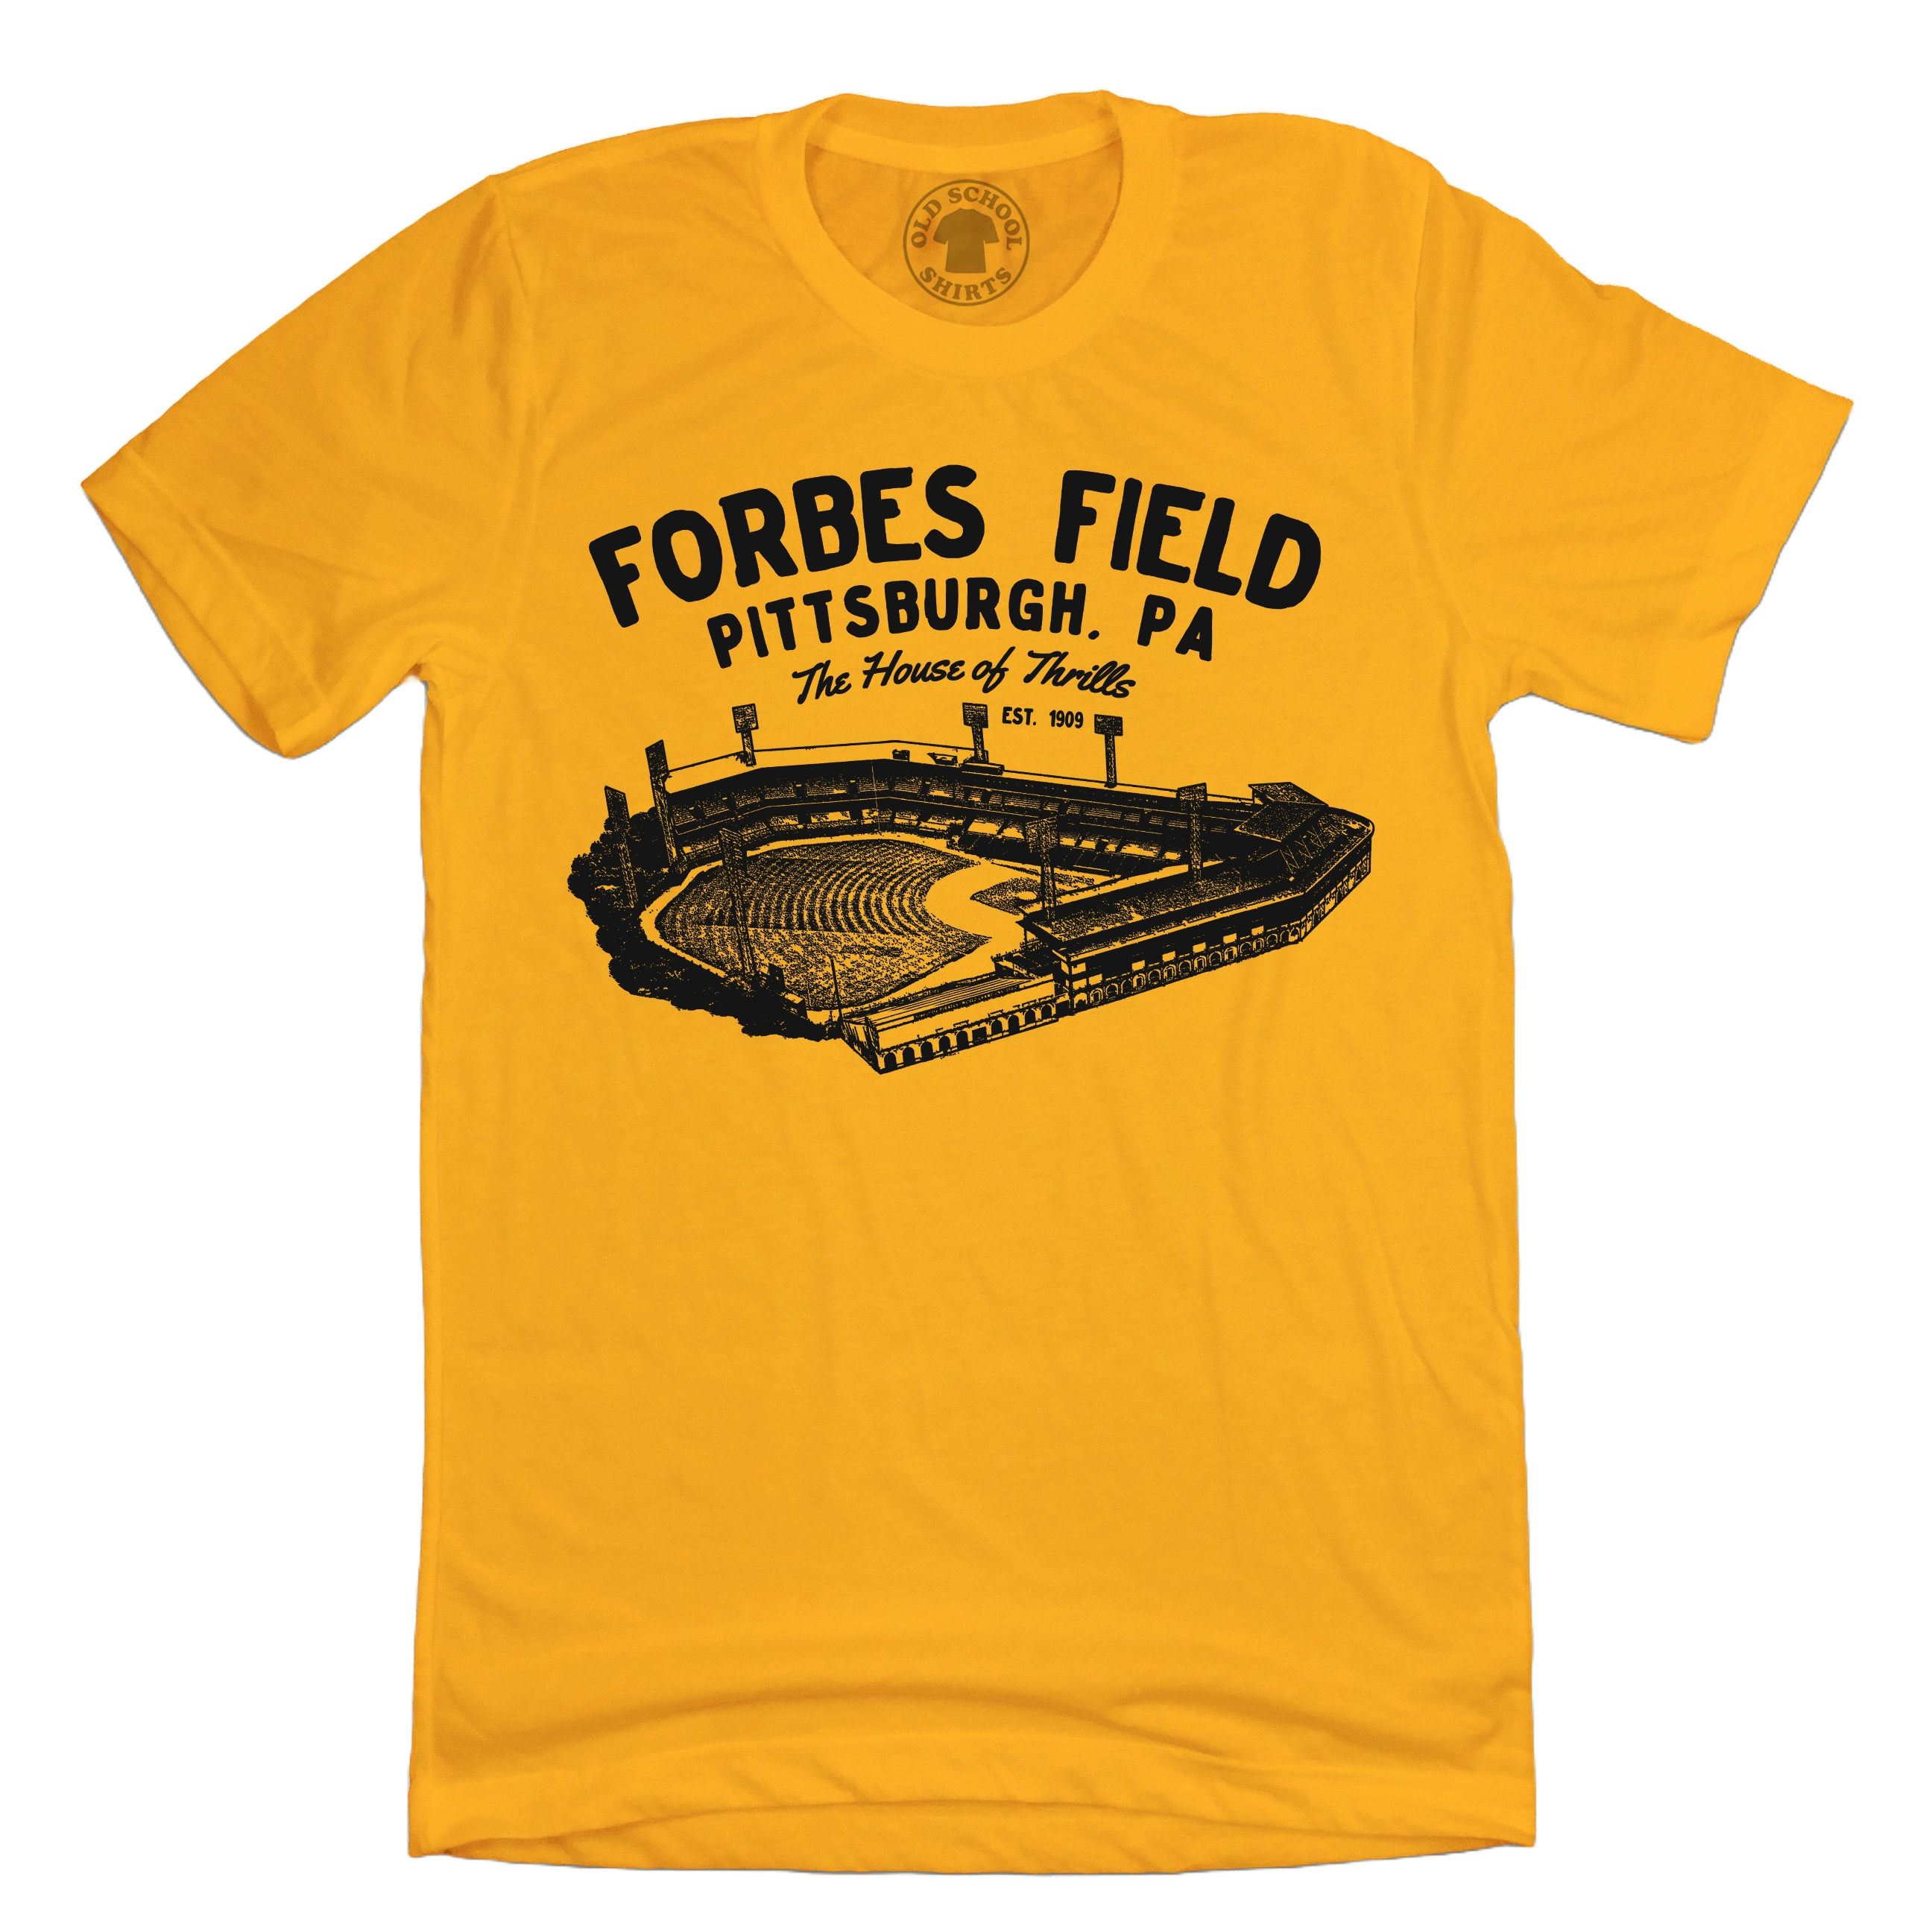 Vintage 1990 MLB Pittsburgh Pirates Eastern Division Champions T-shirt